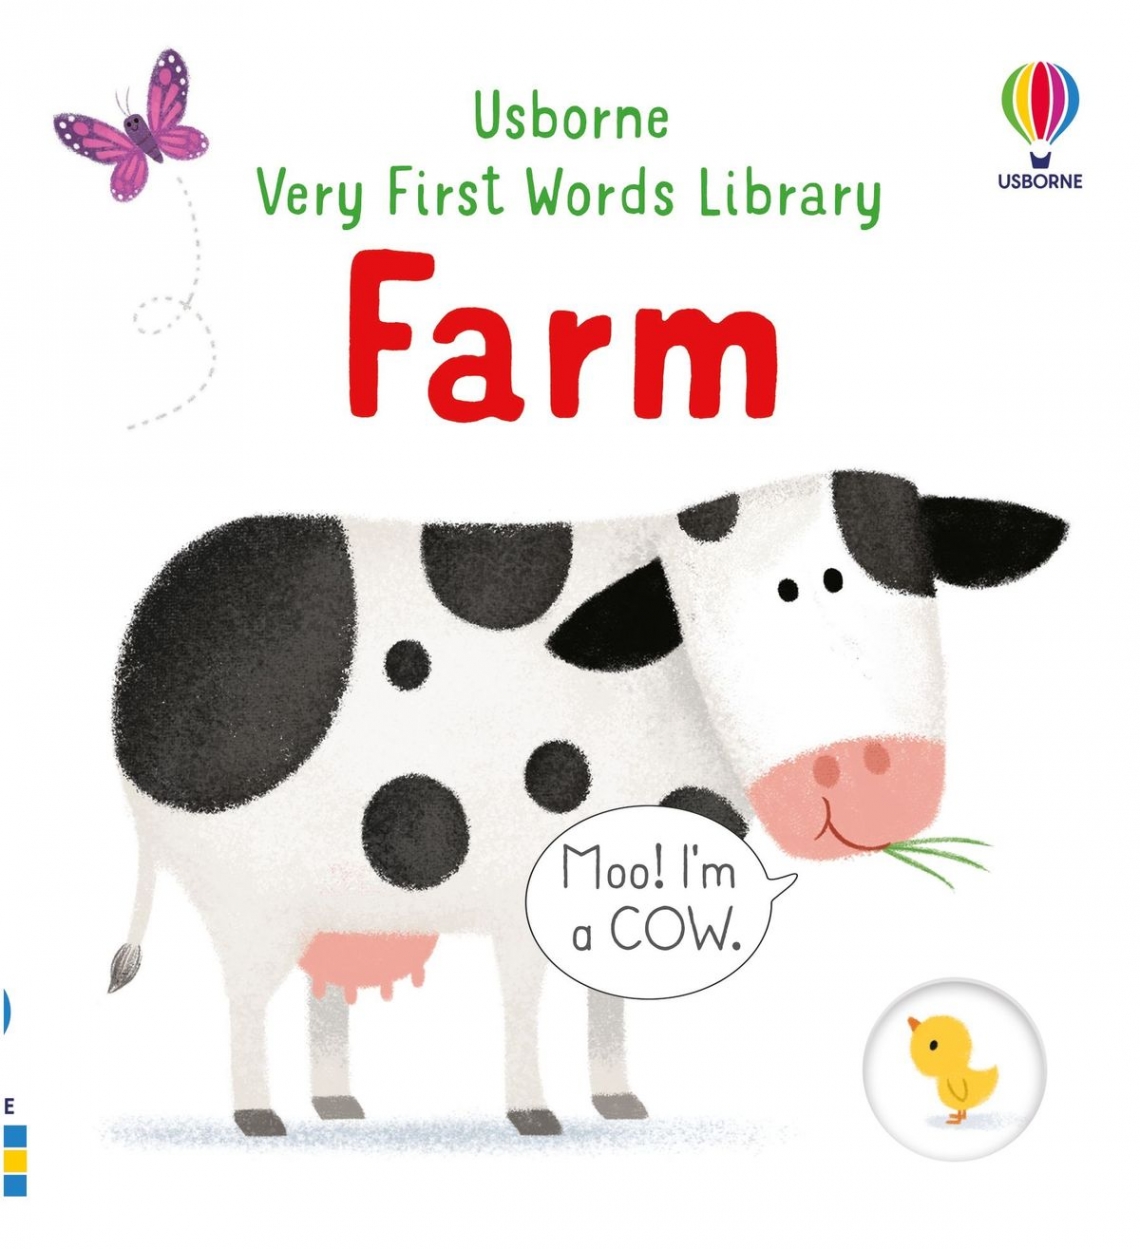 Vfw Library Farm 